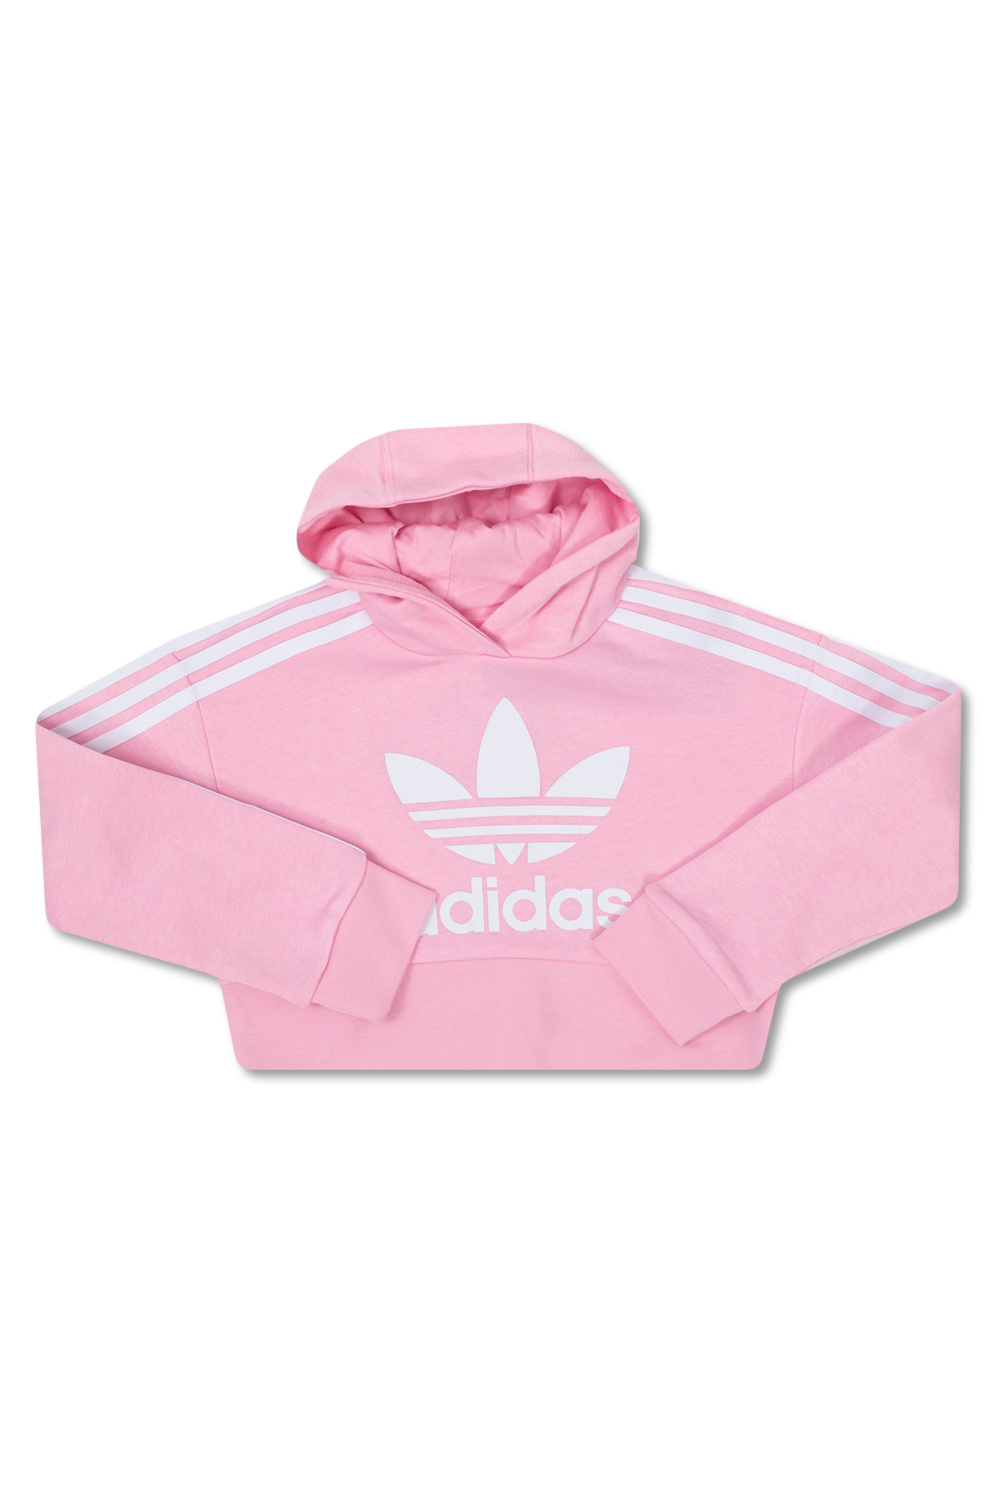 adidas Originals Superstar II hoodie - Logo | | IS Kids ADIDAS IetpShops | clothes 14 Kids\'s (4 years) Grey Girls